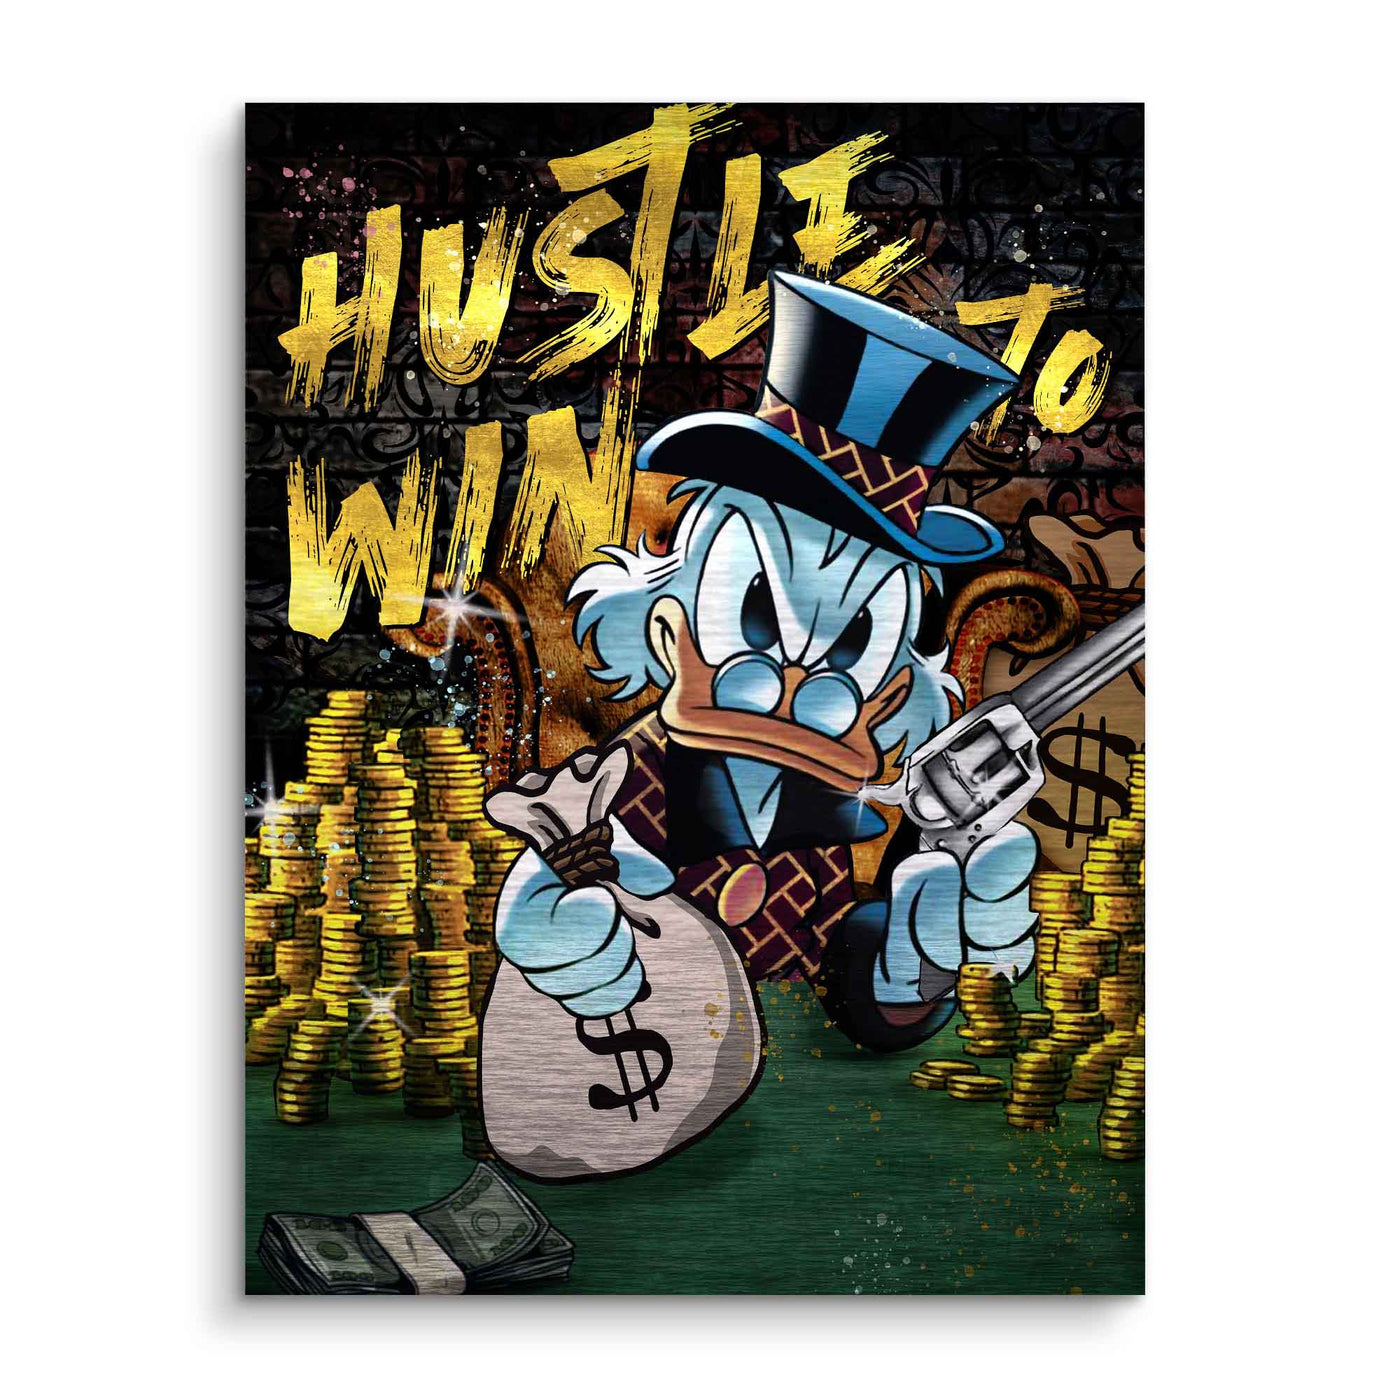 Hustle to win